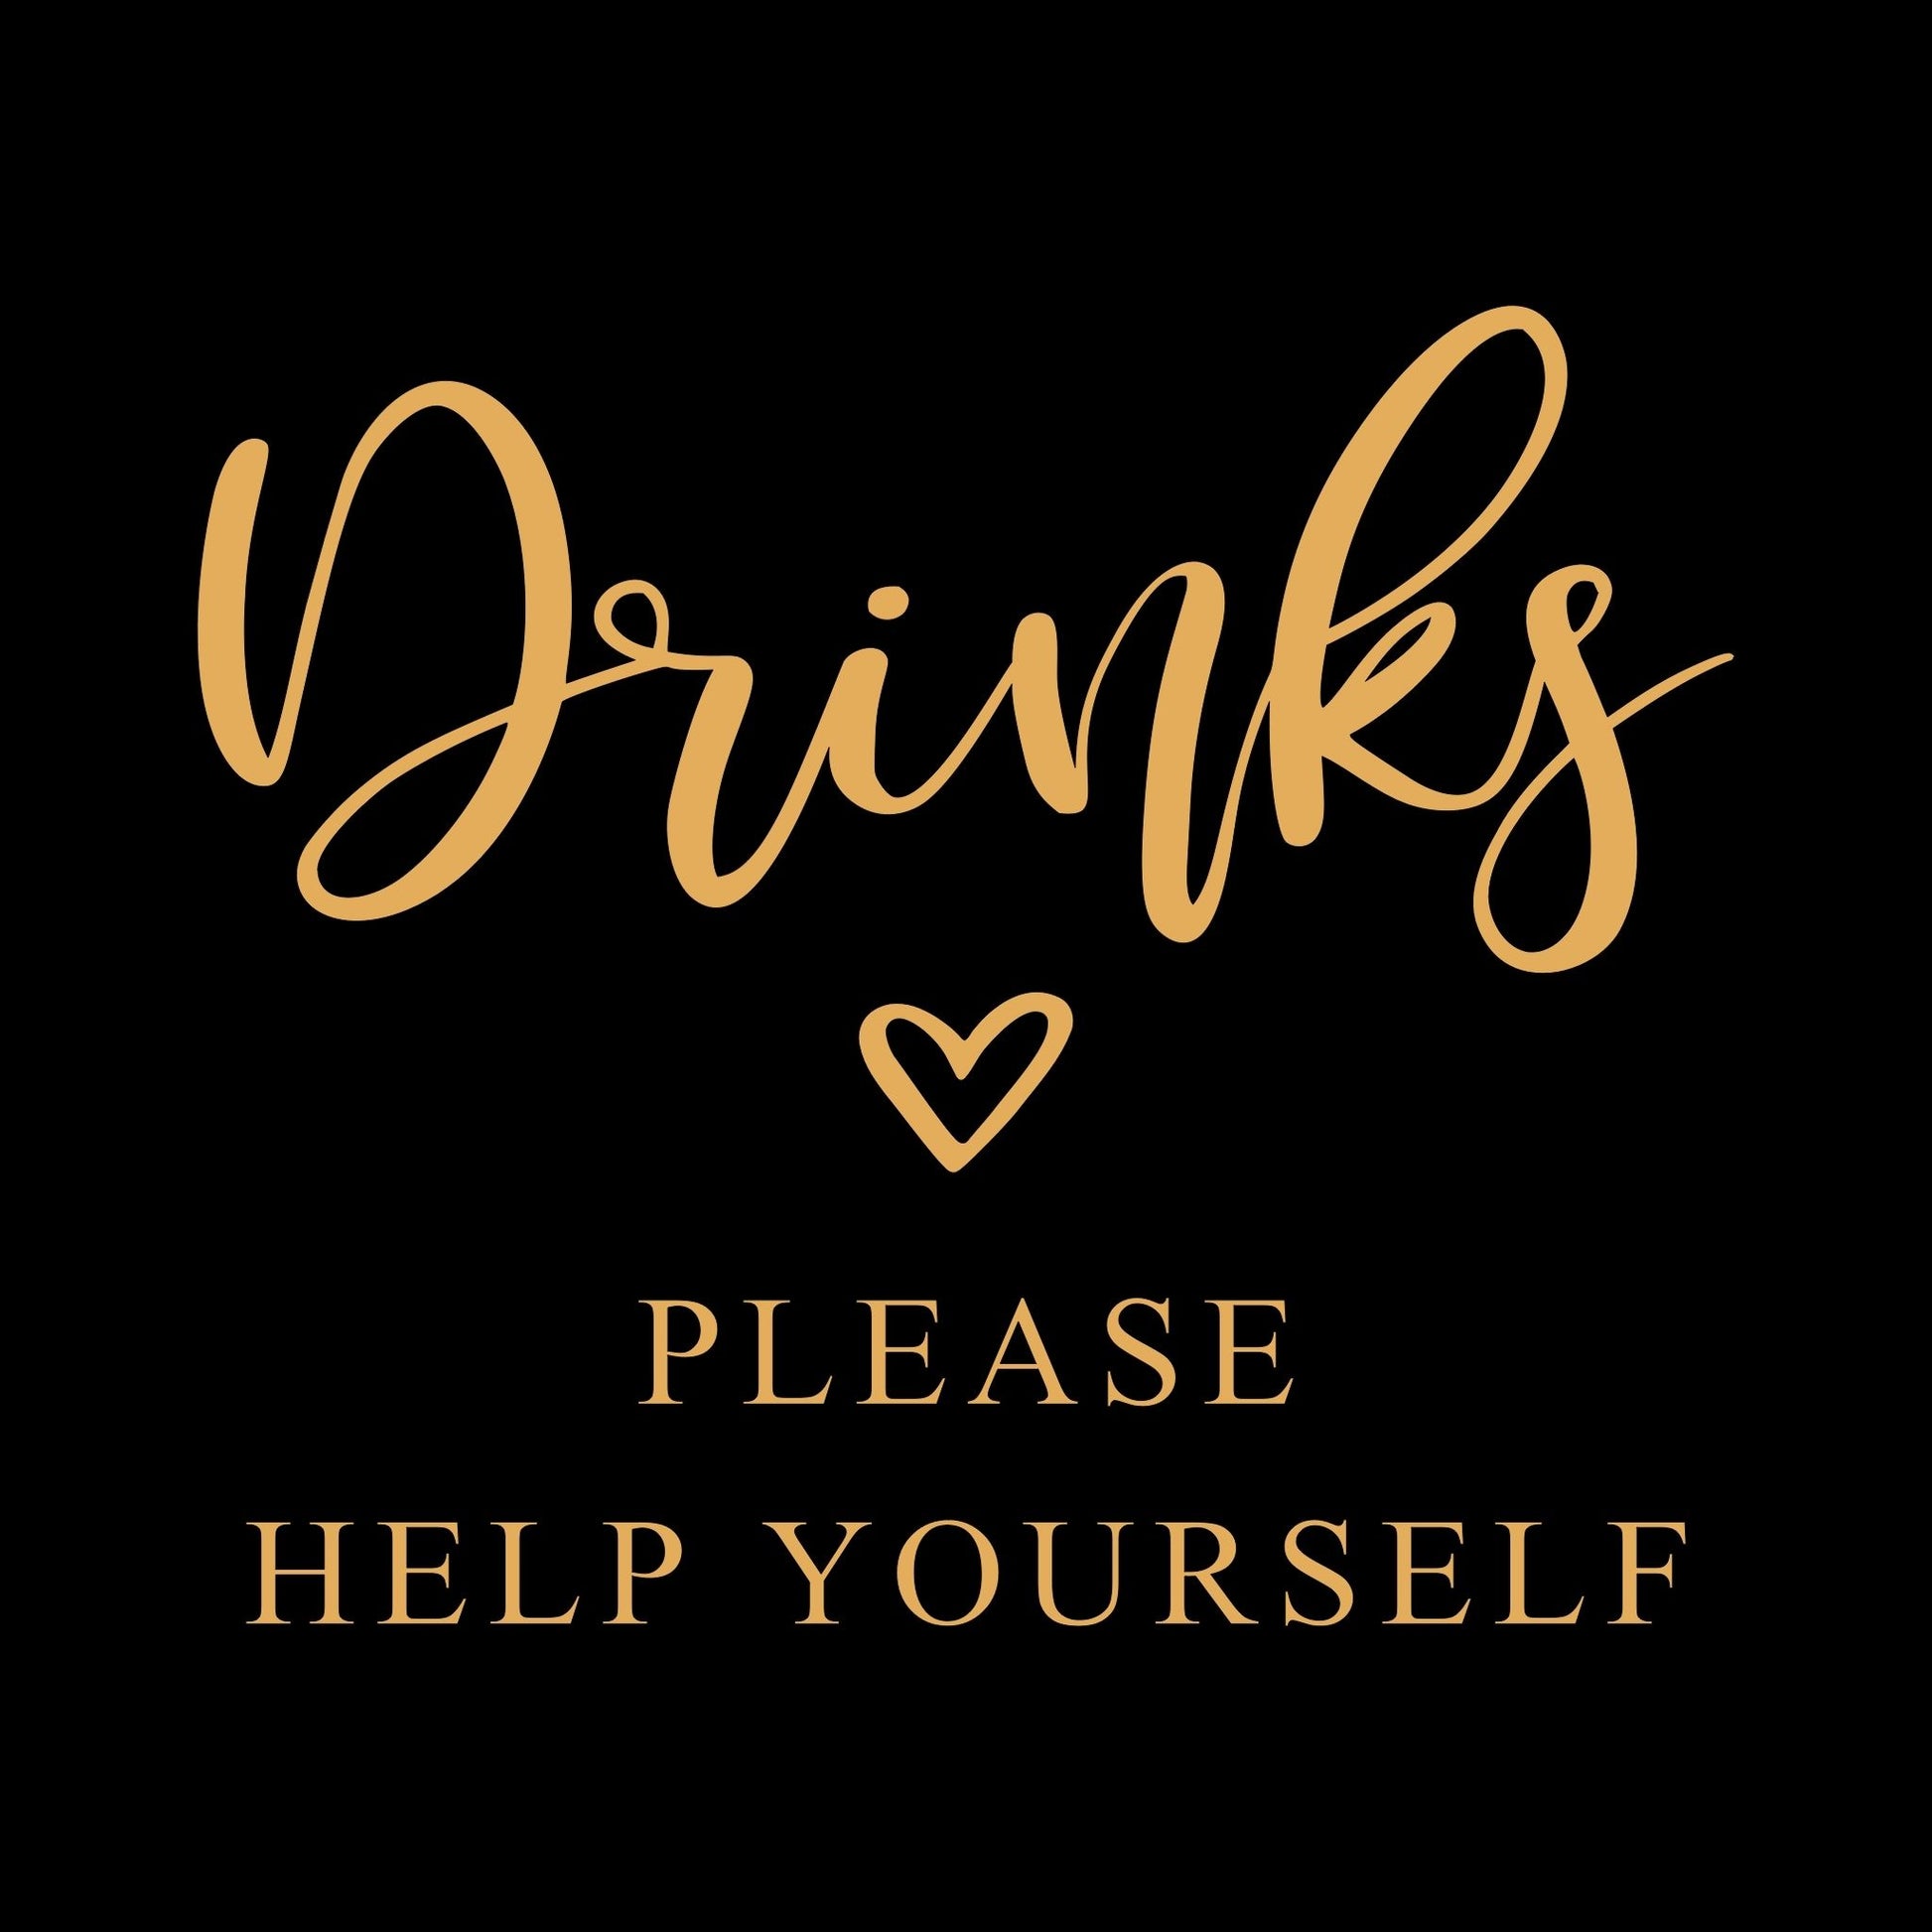 Drinks Please Help Yourself Wedding Reception Sign